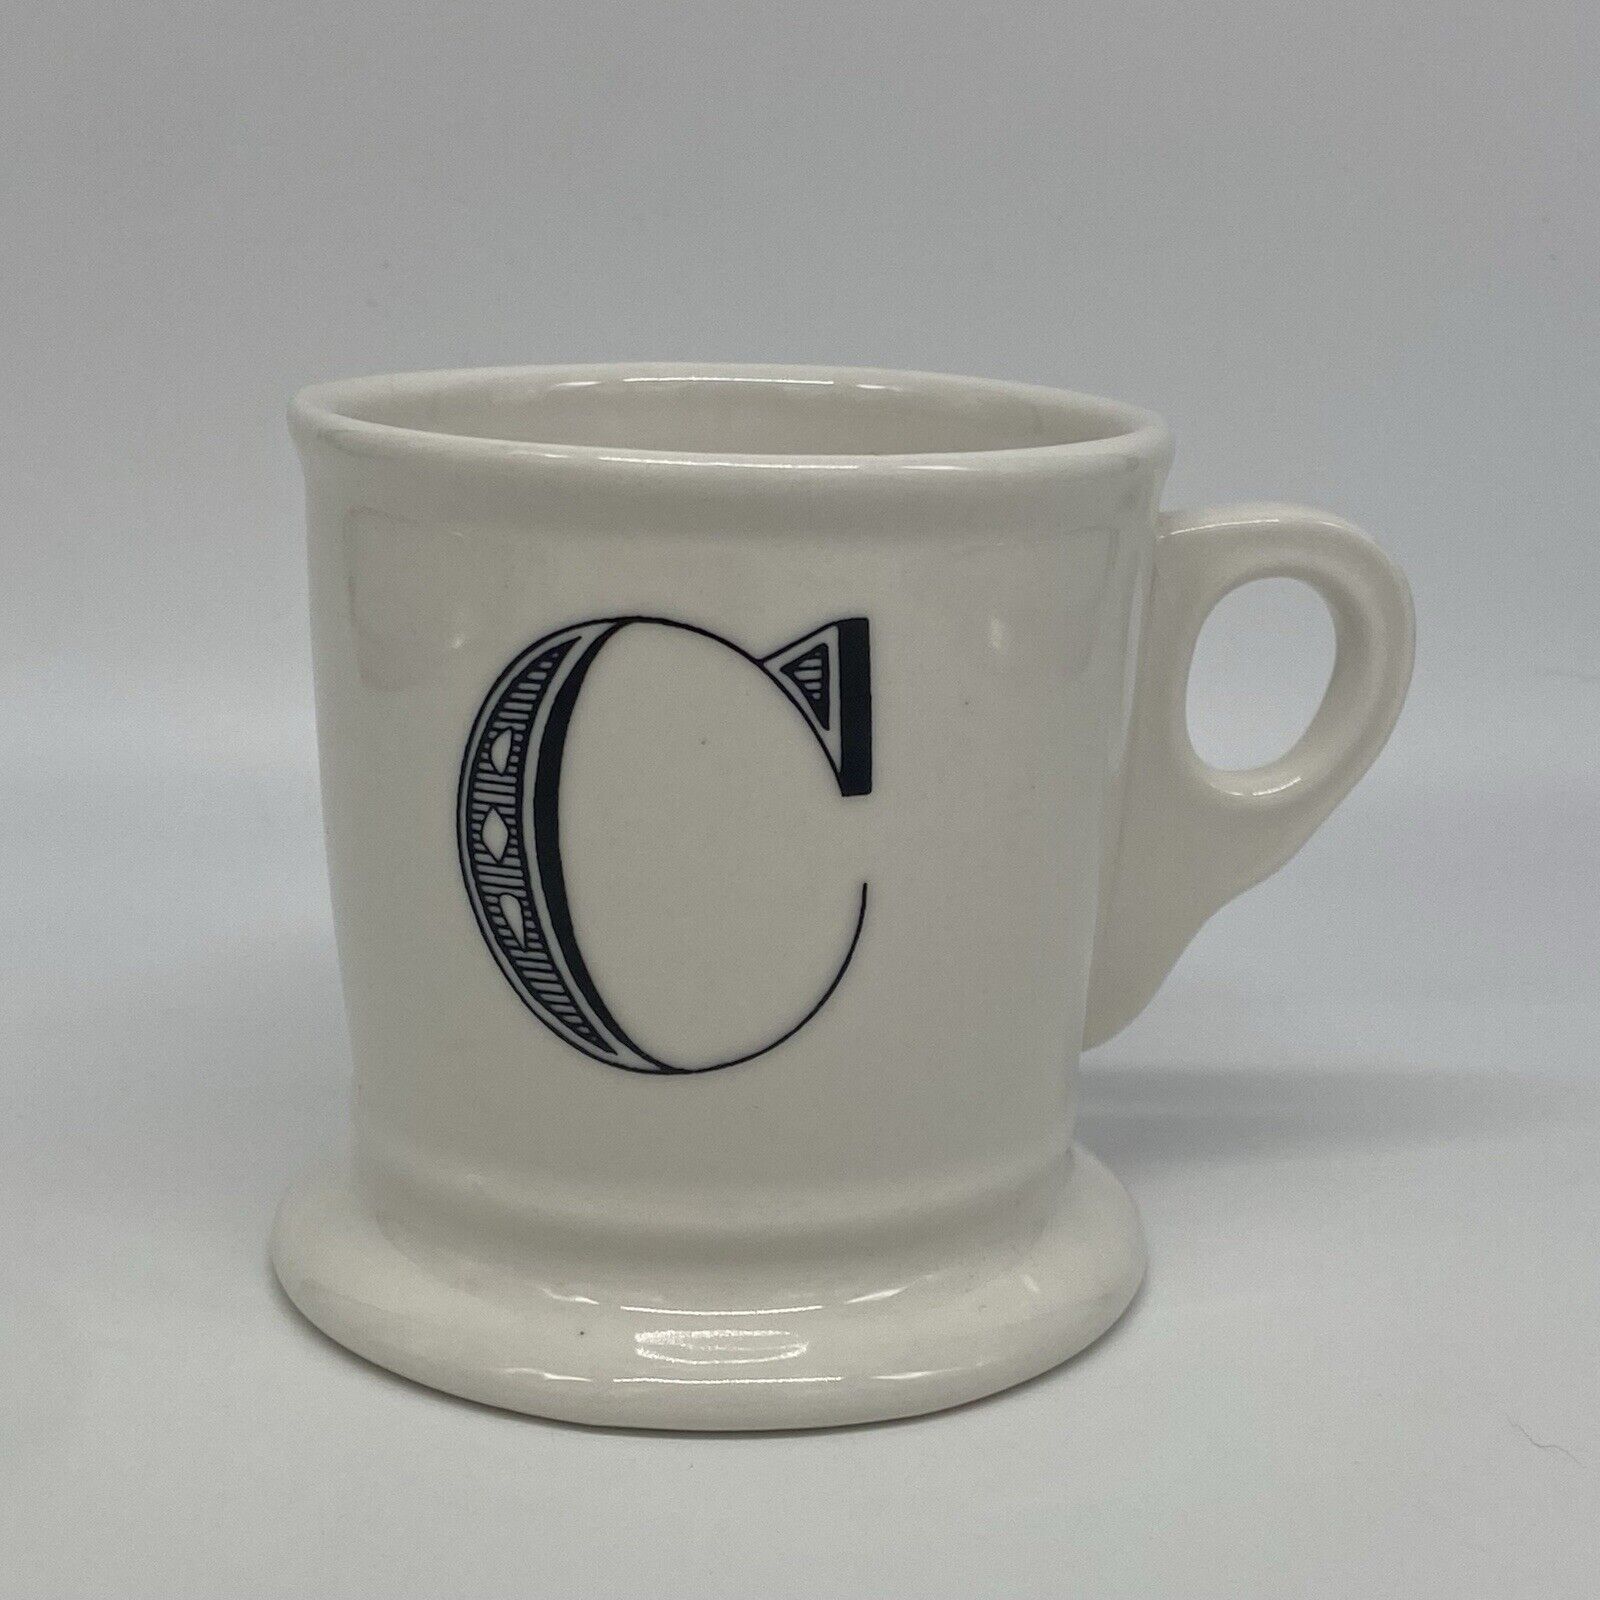 Anthropologie Shaving Mug / Coffee Cup - Monogram / Initial / Letter C